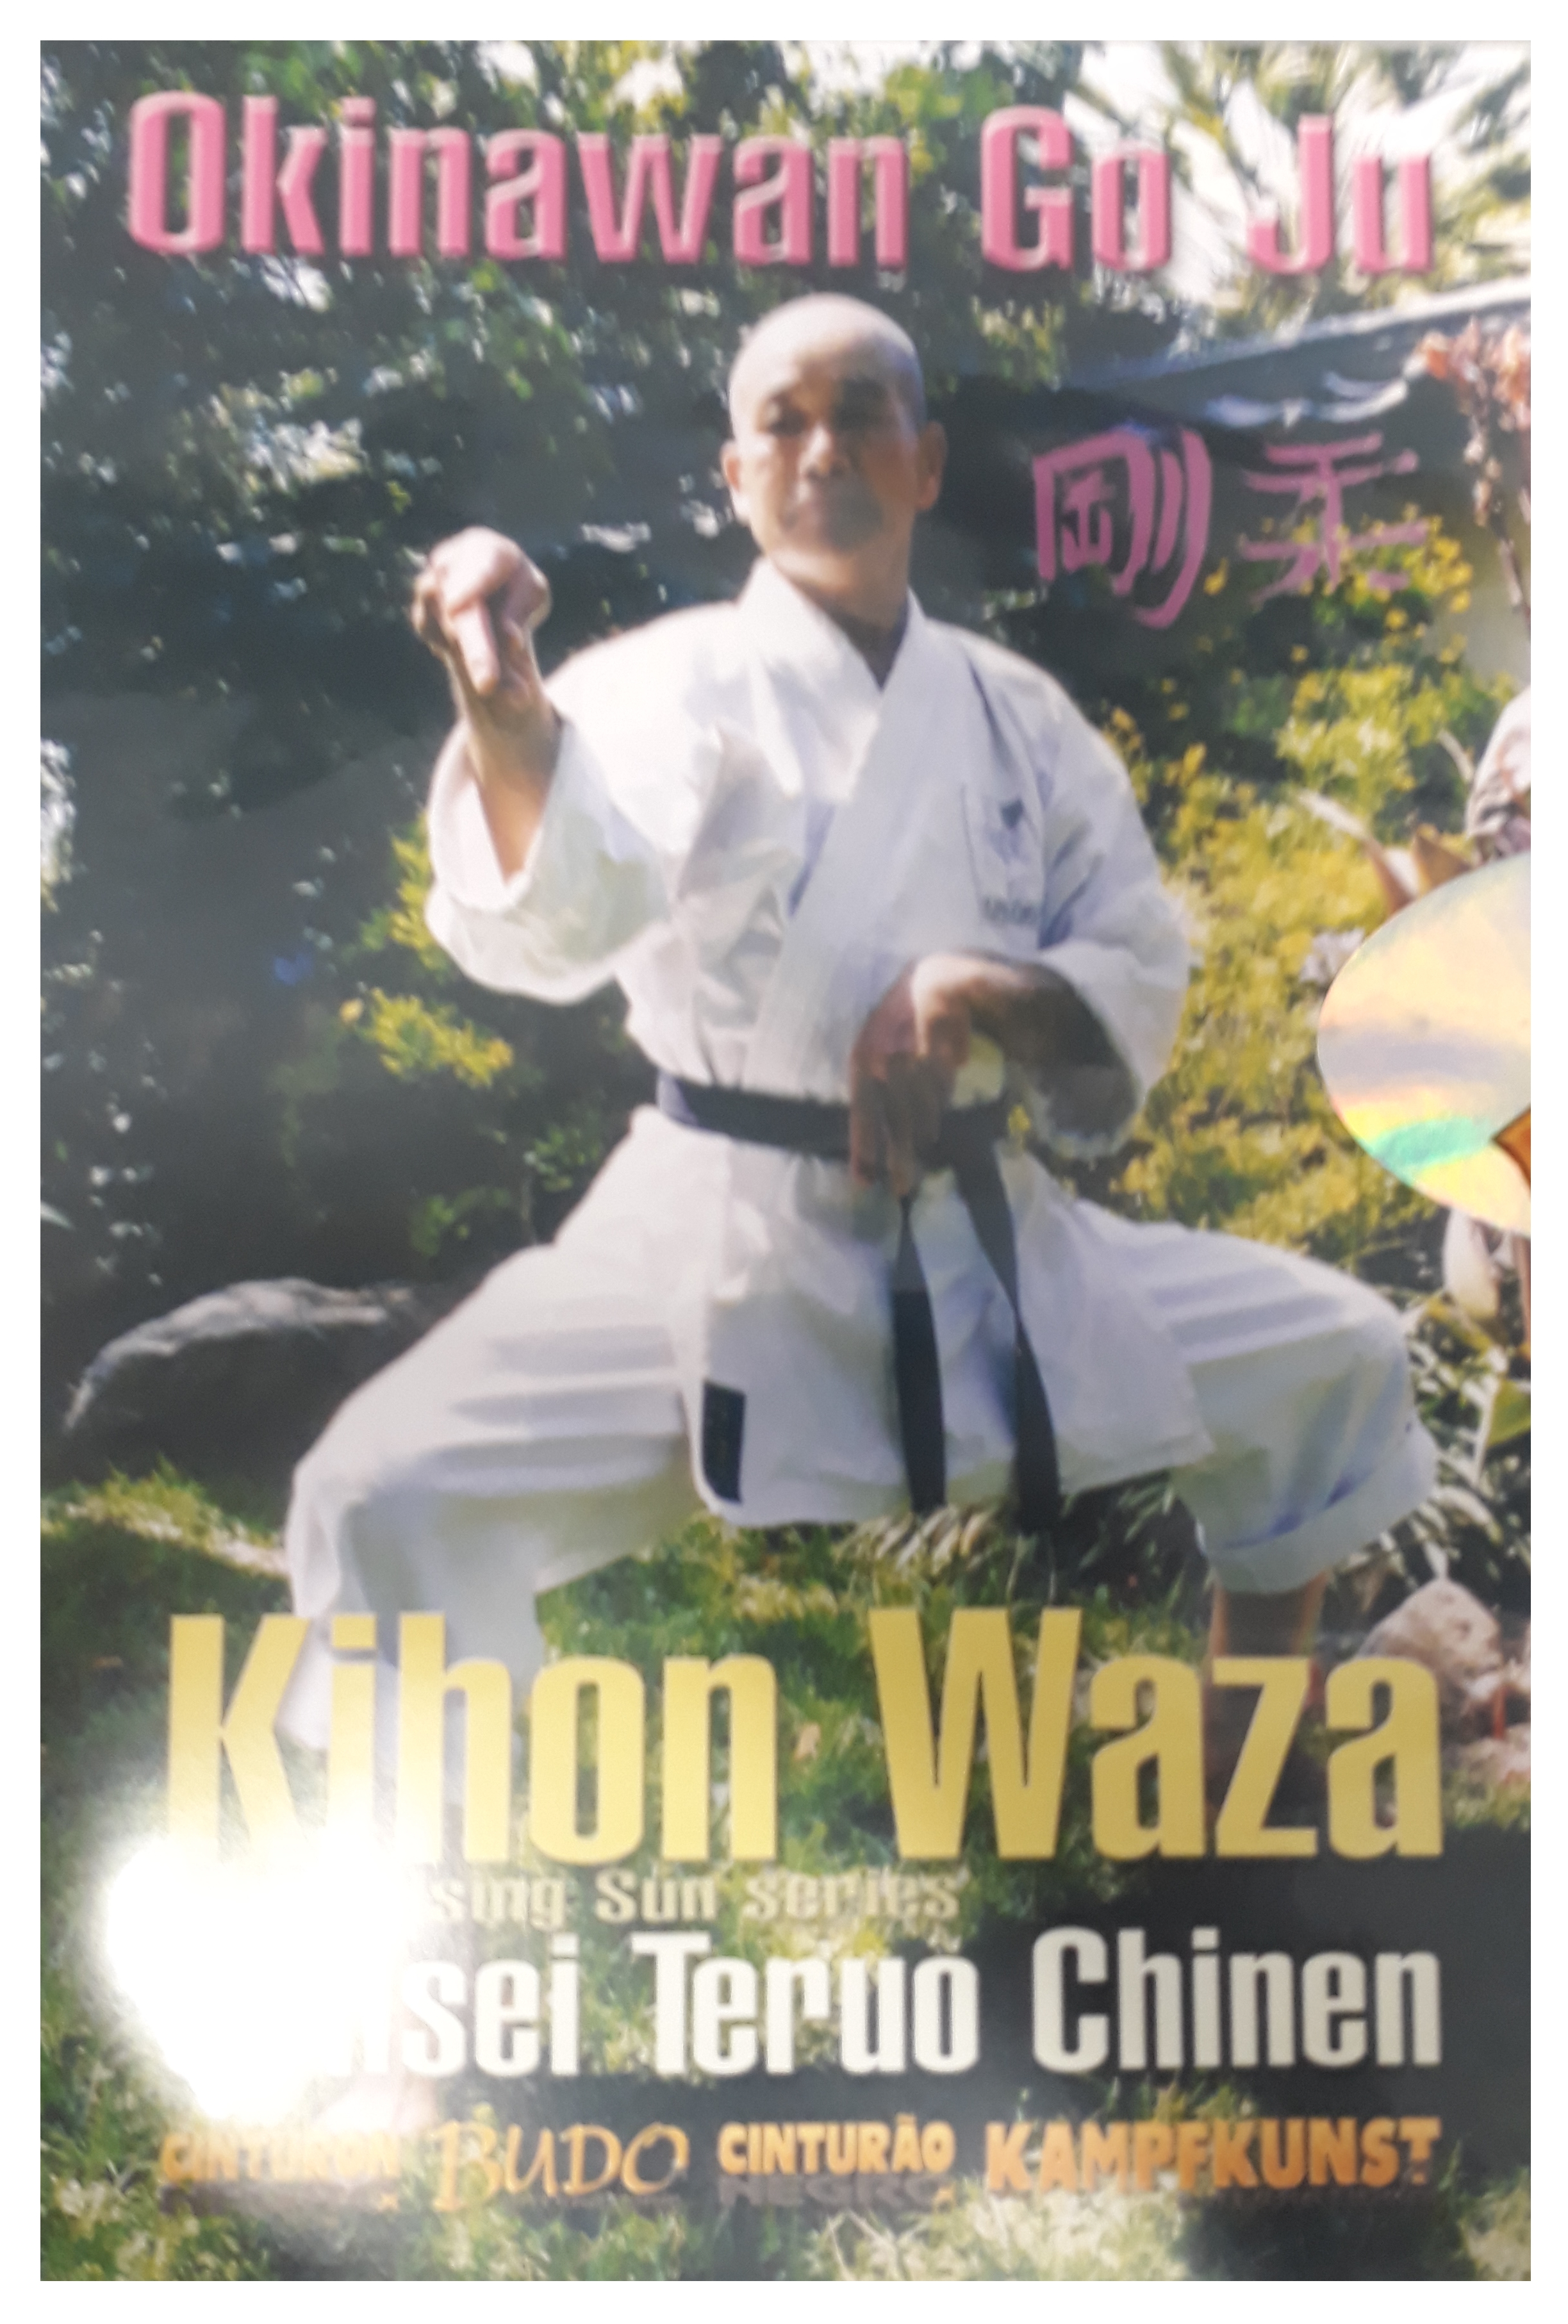 DVD Okinawan Go Ju - Kihon Waza